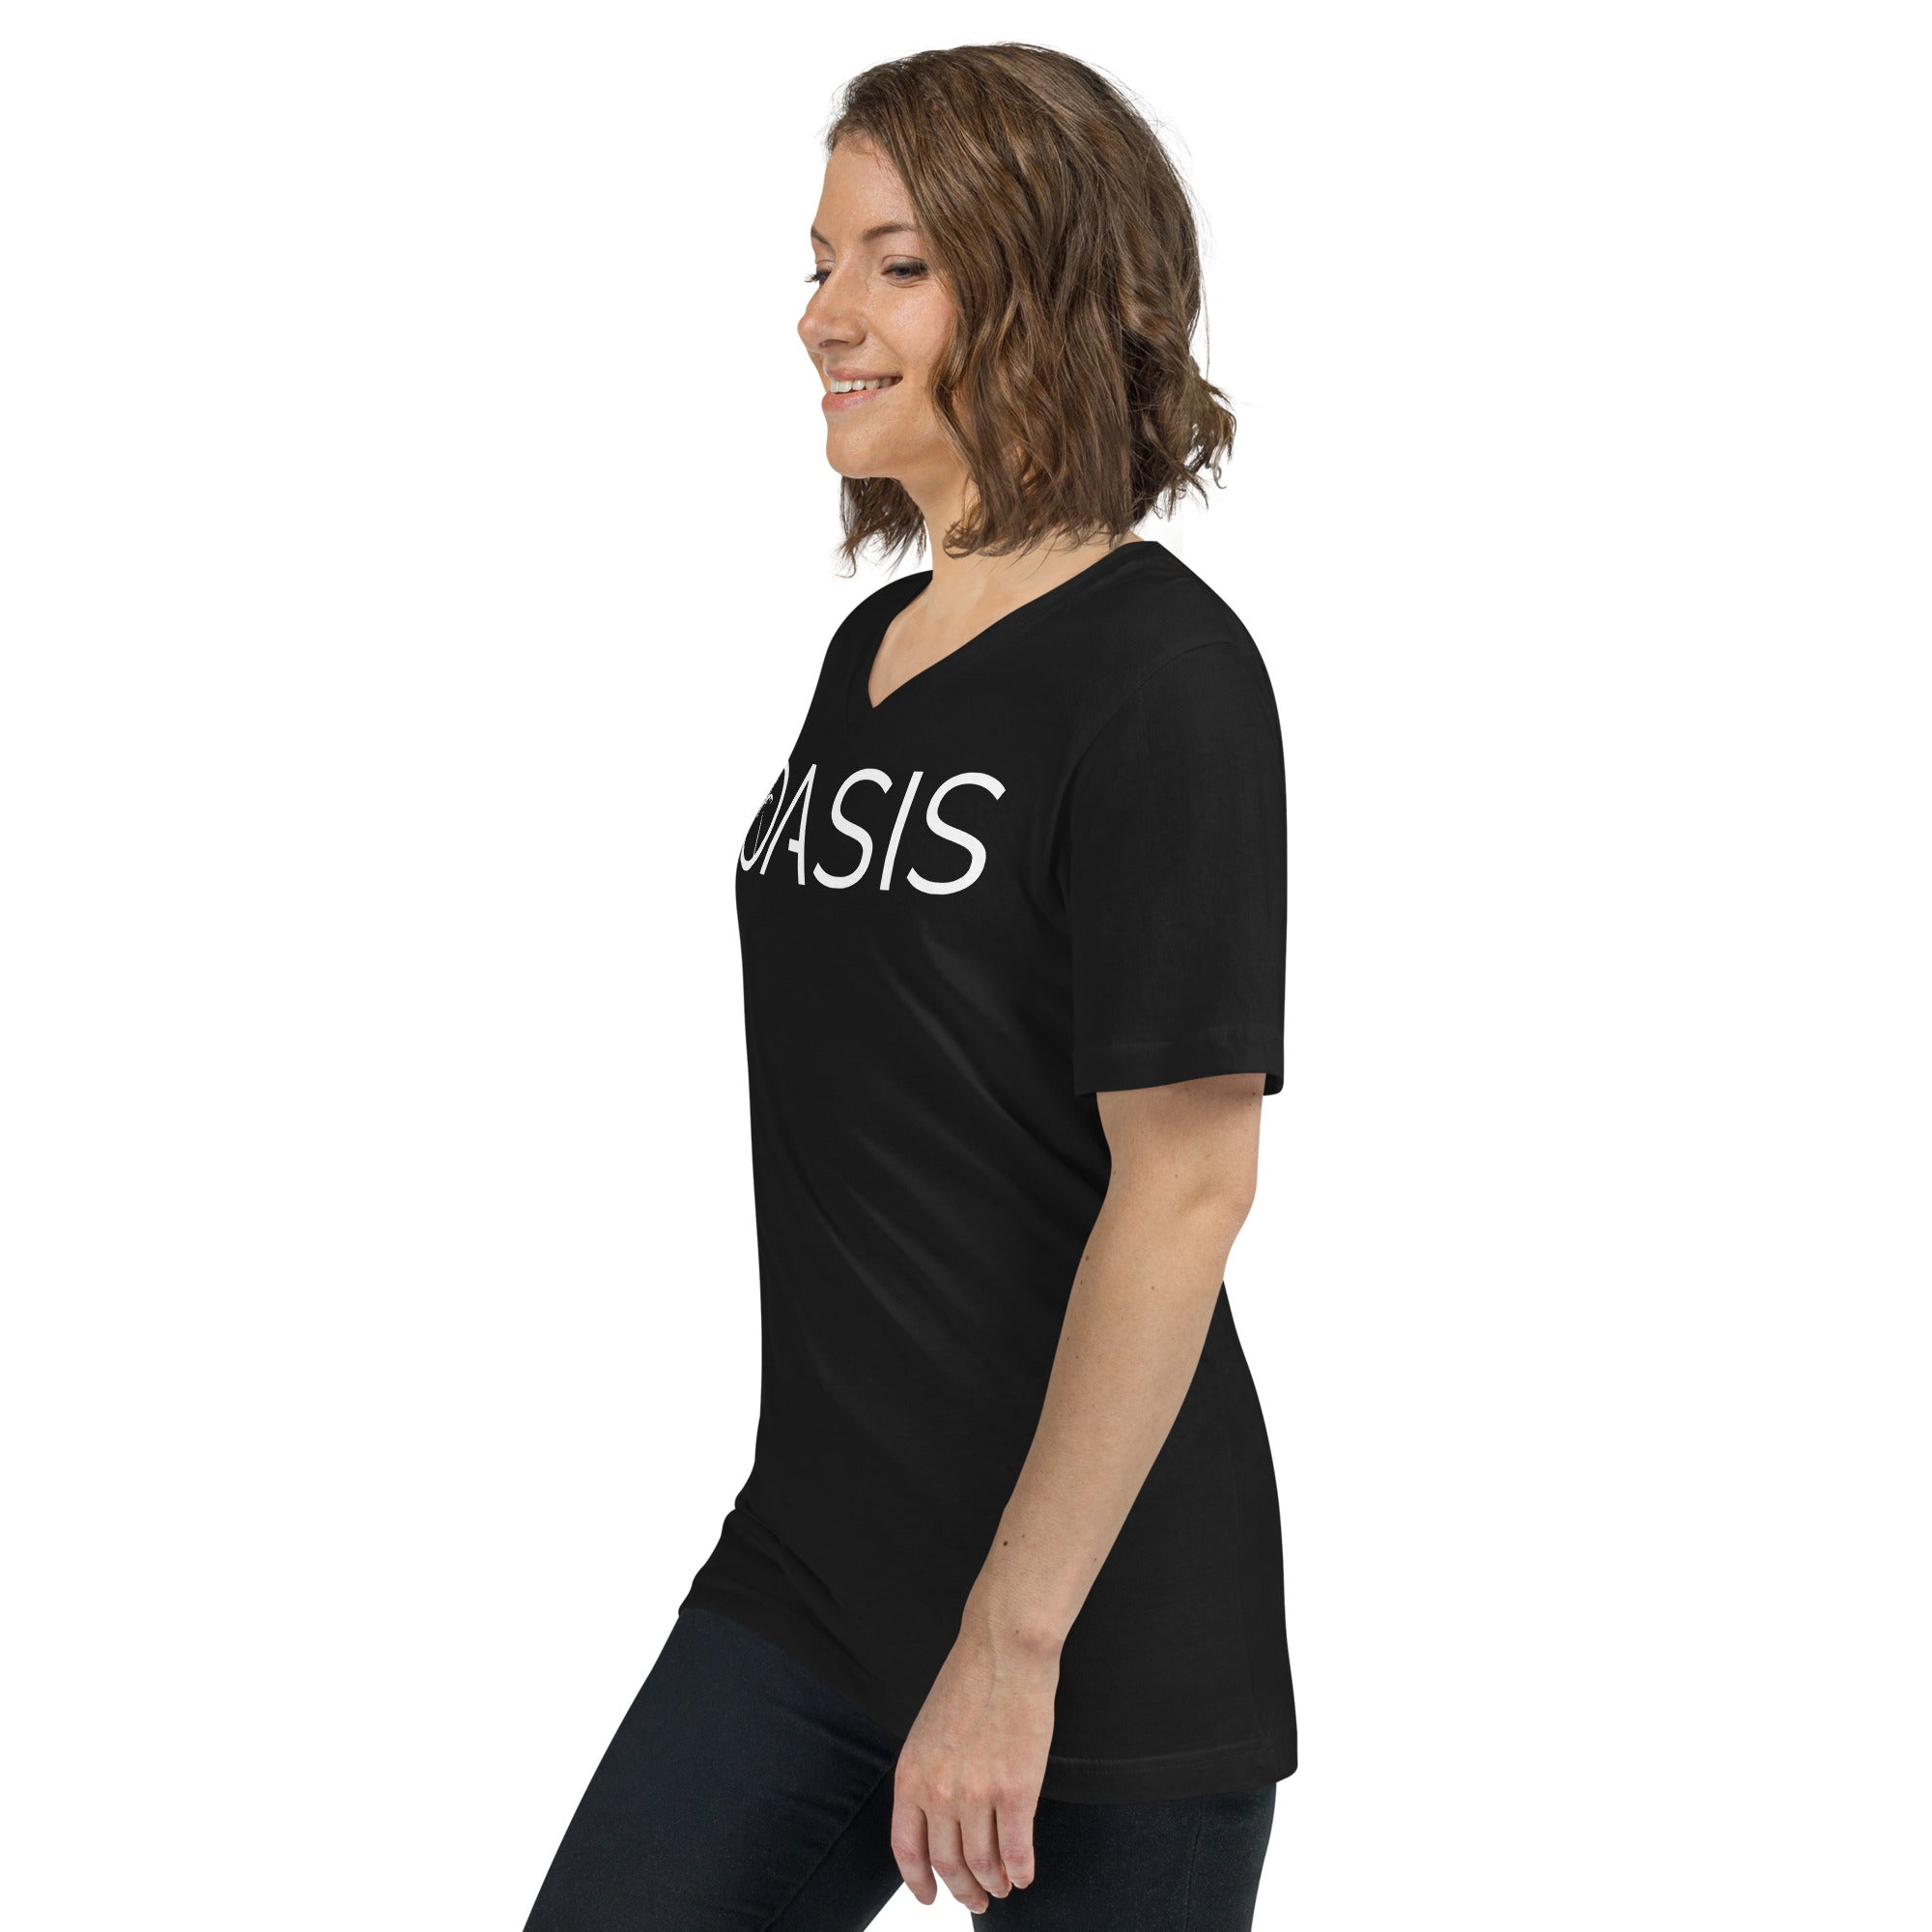 OASIS Unisex Short Sleeve V-Neck T-Shirt